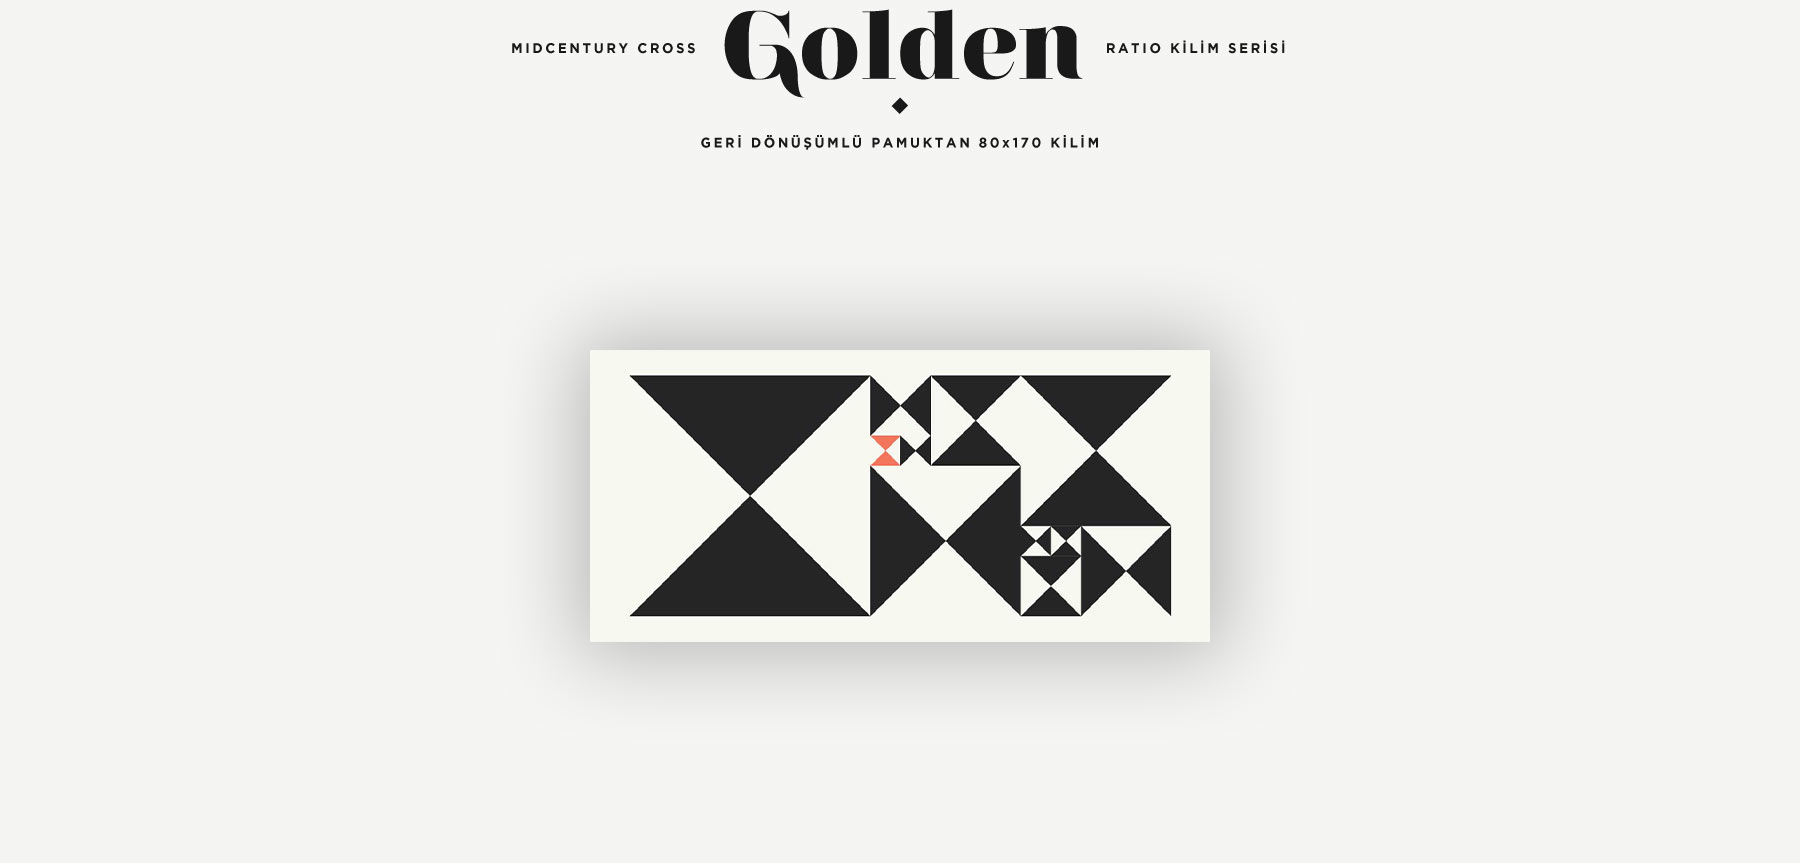 midcentury cross golden ratio kilim serisi'in resmi